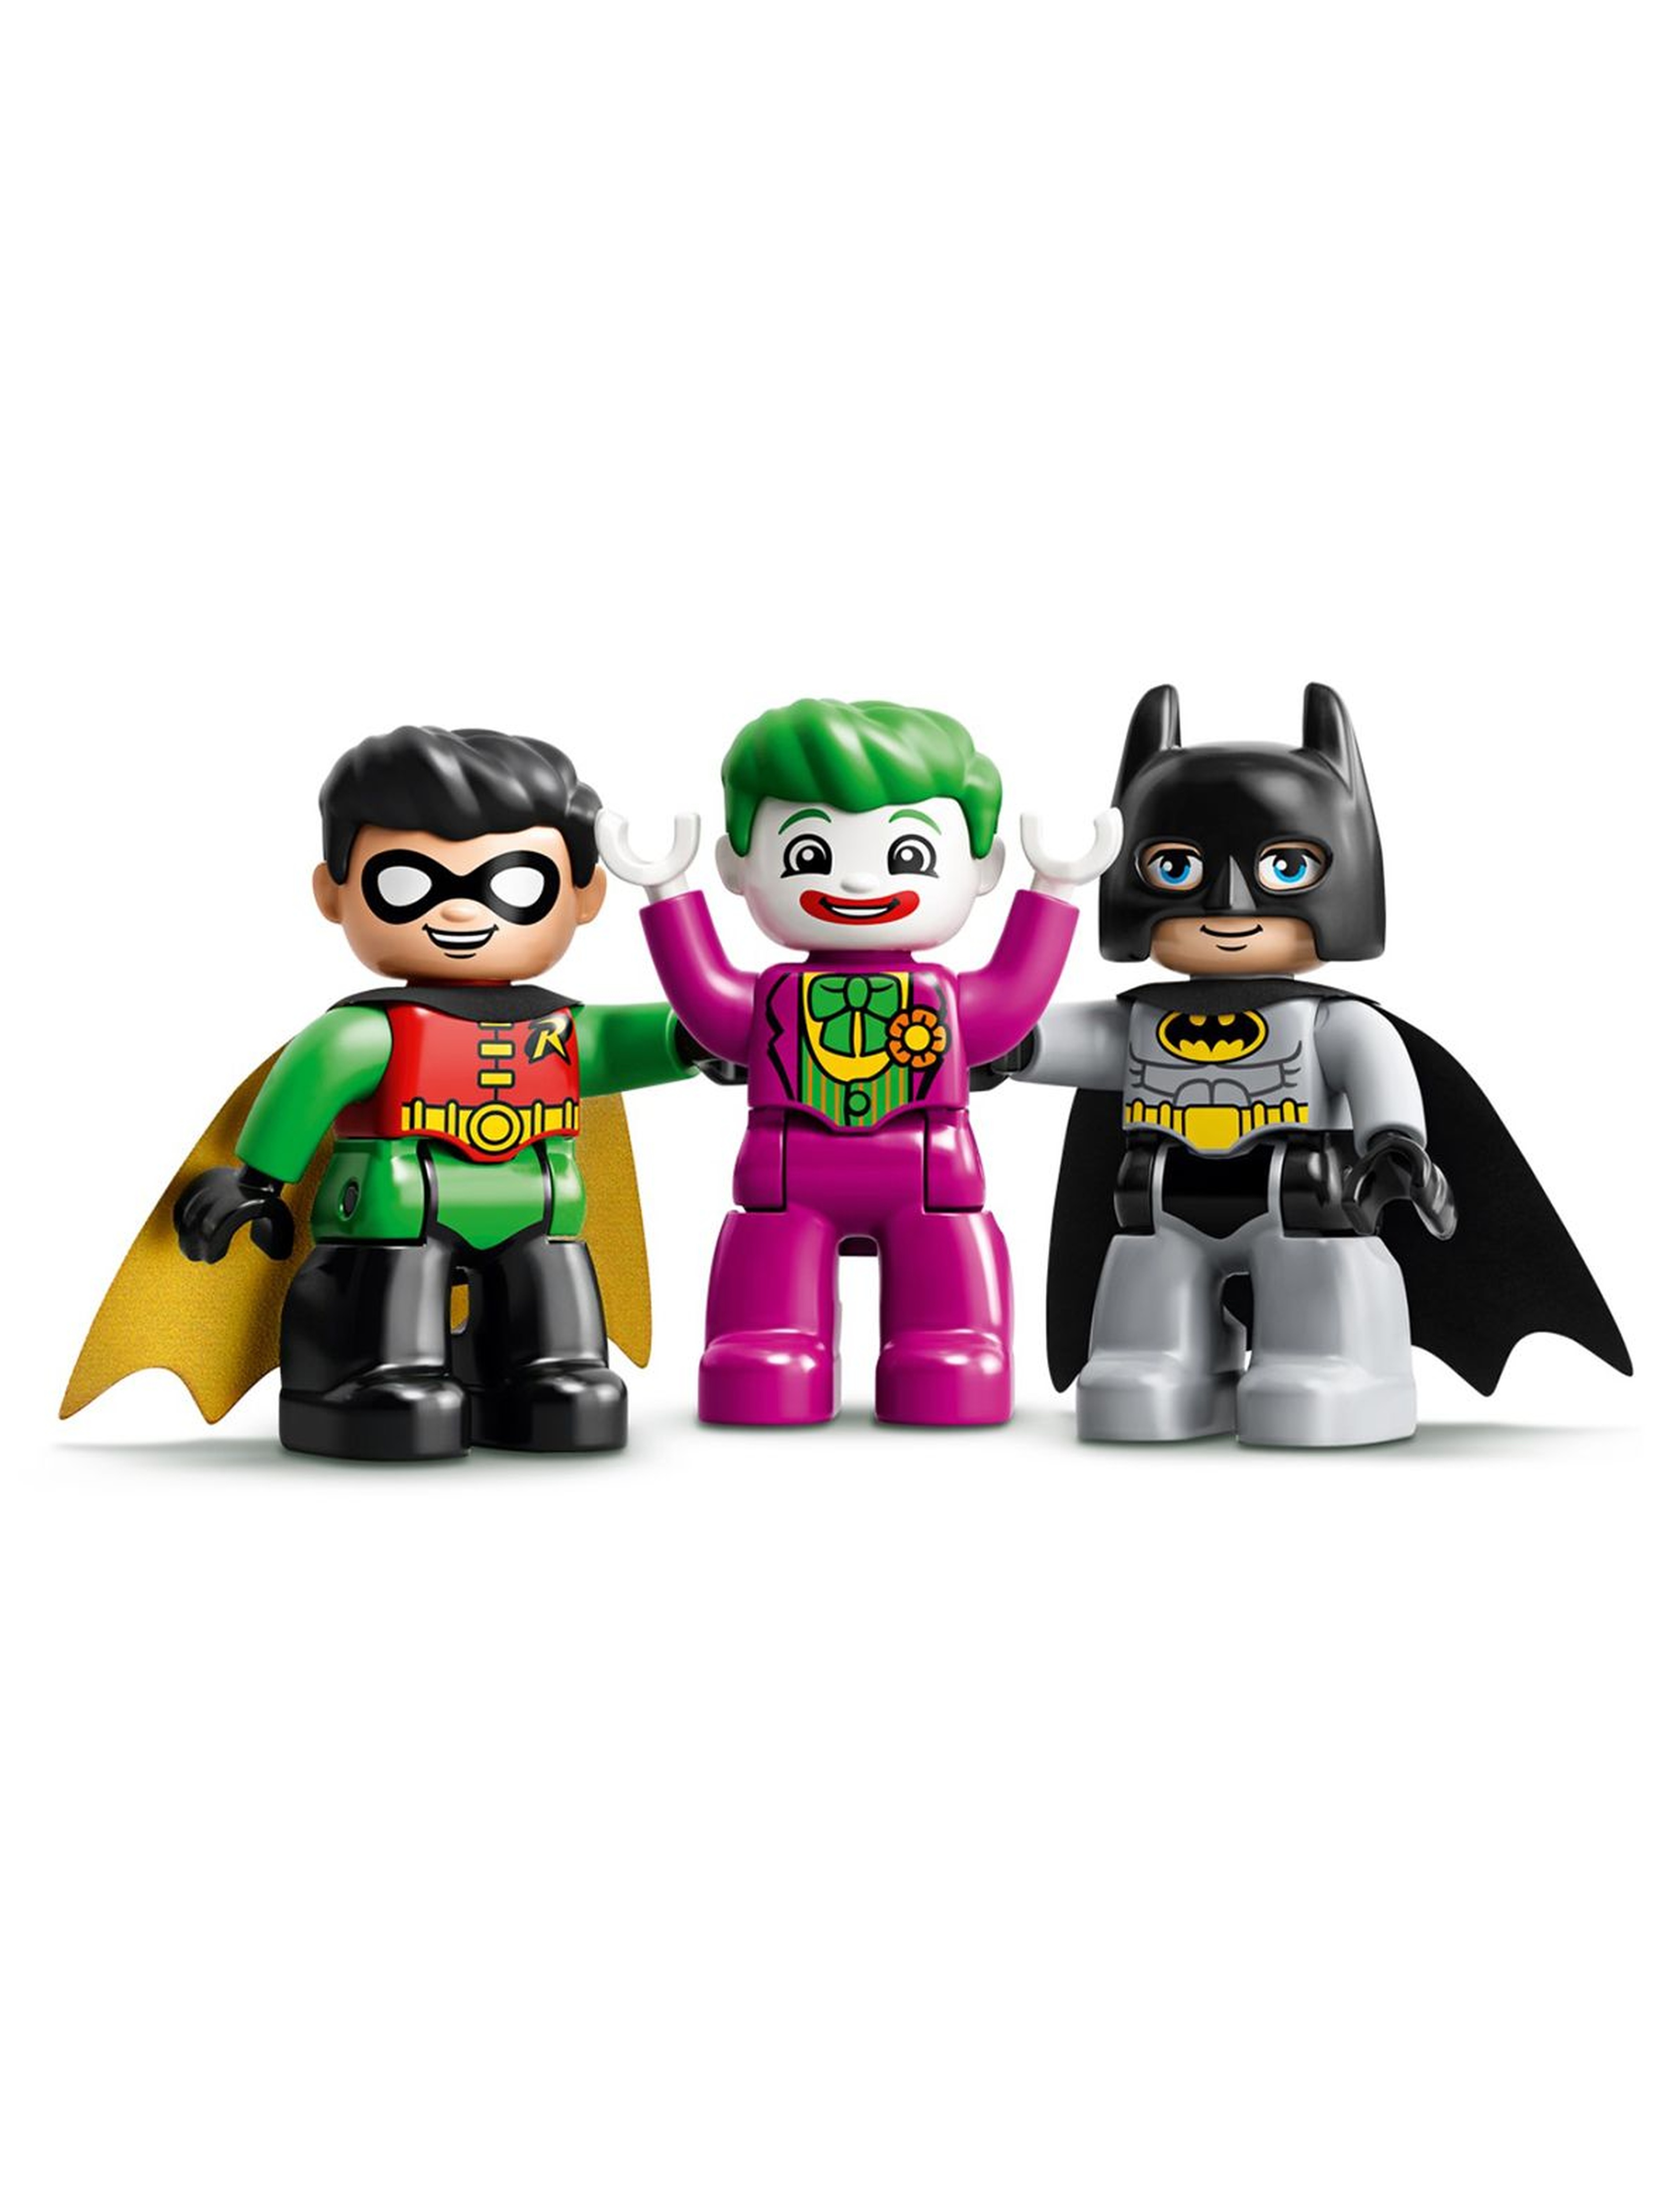 Lego Duplo 10919 Jaskinia Batmana - 33 elementy wiek 2+